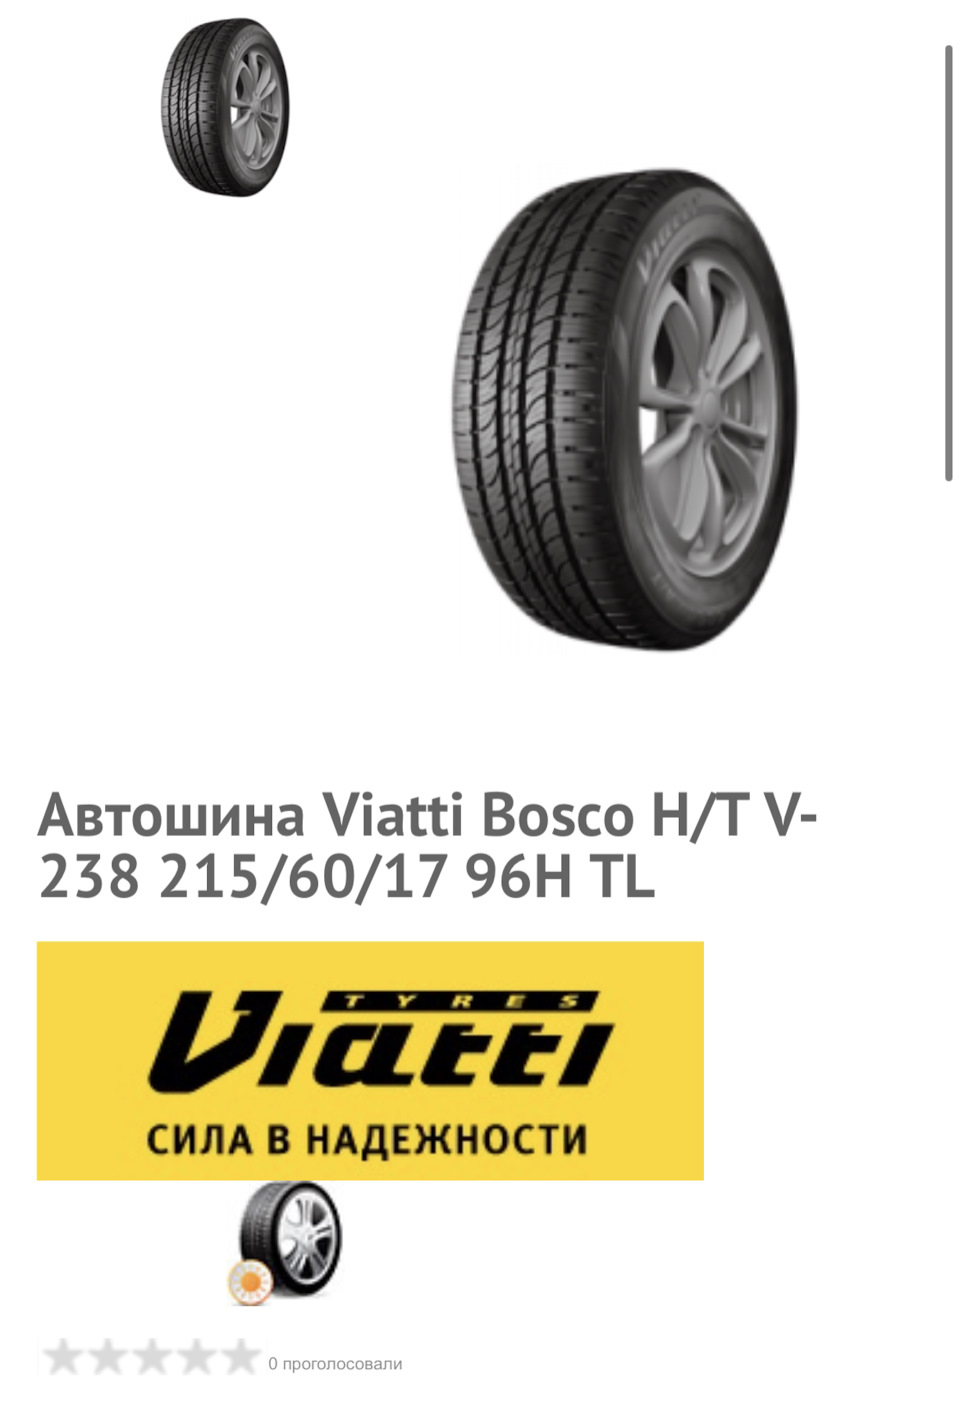 Viatti bosco v 238 купить. Viatti Bosco h/t (v-238). Viatti Bosco h/t v-238 квронаклейка. Вес покрышки r17. Летние шины 215/60 r17 рифленые.